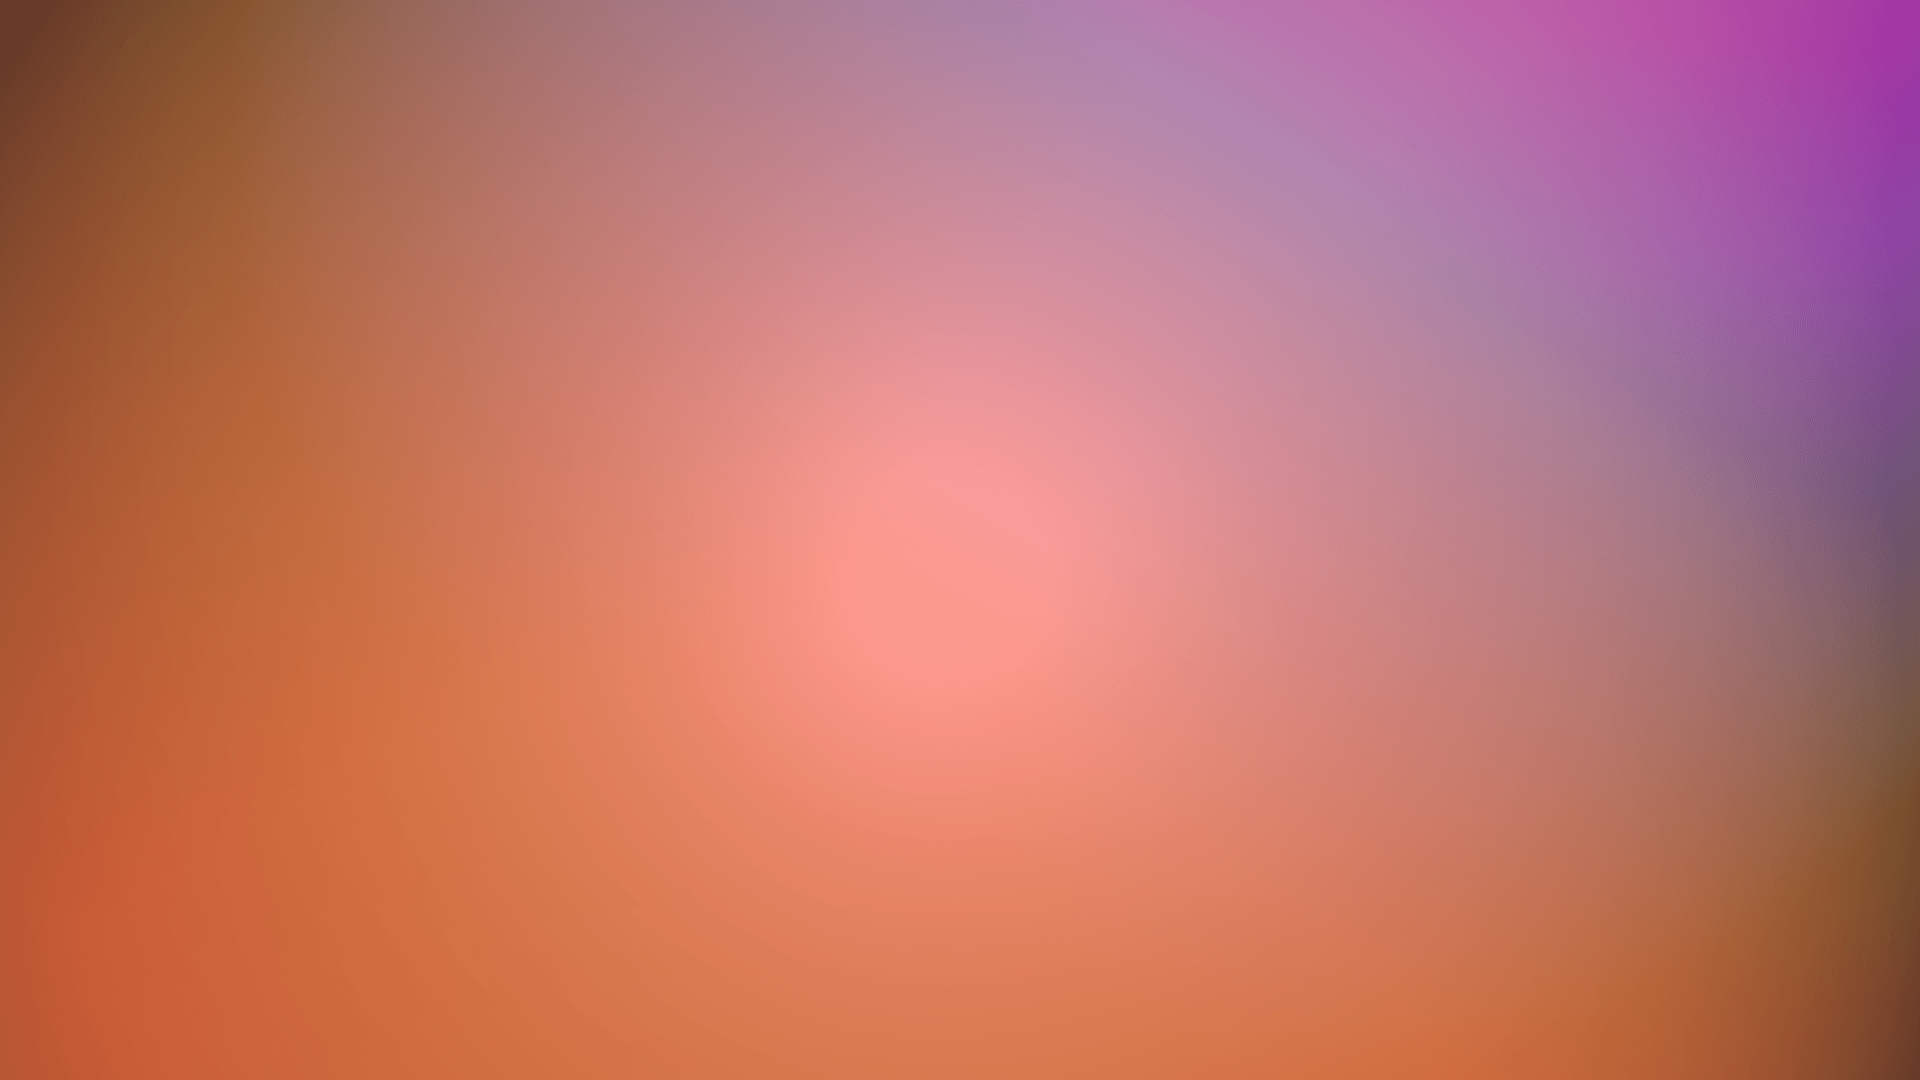 Orange Gradient HD Wallpaper Free Download Peach idolza